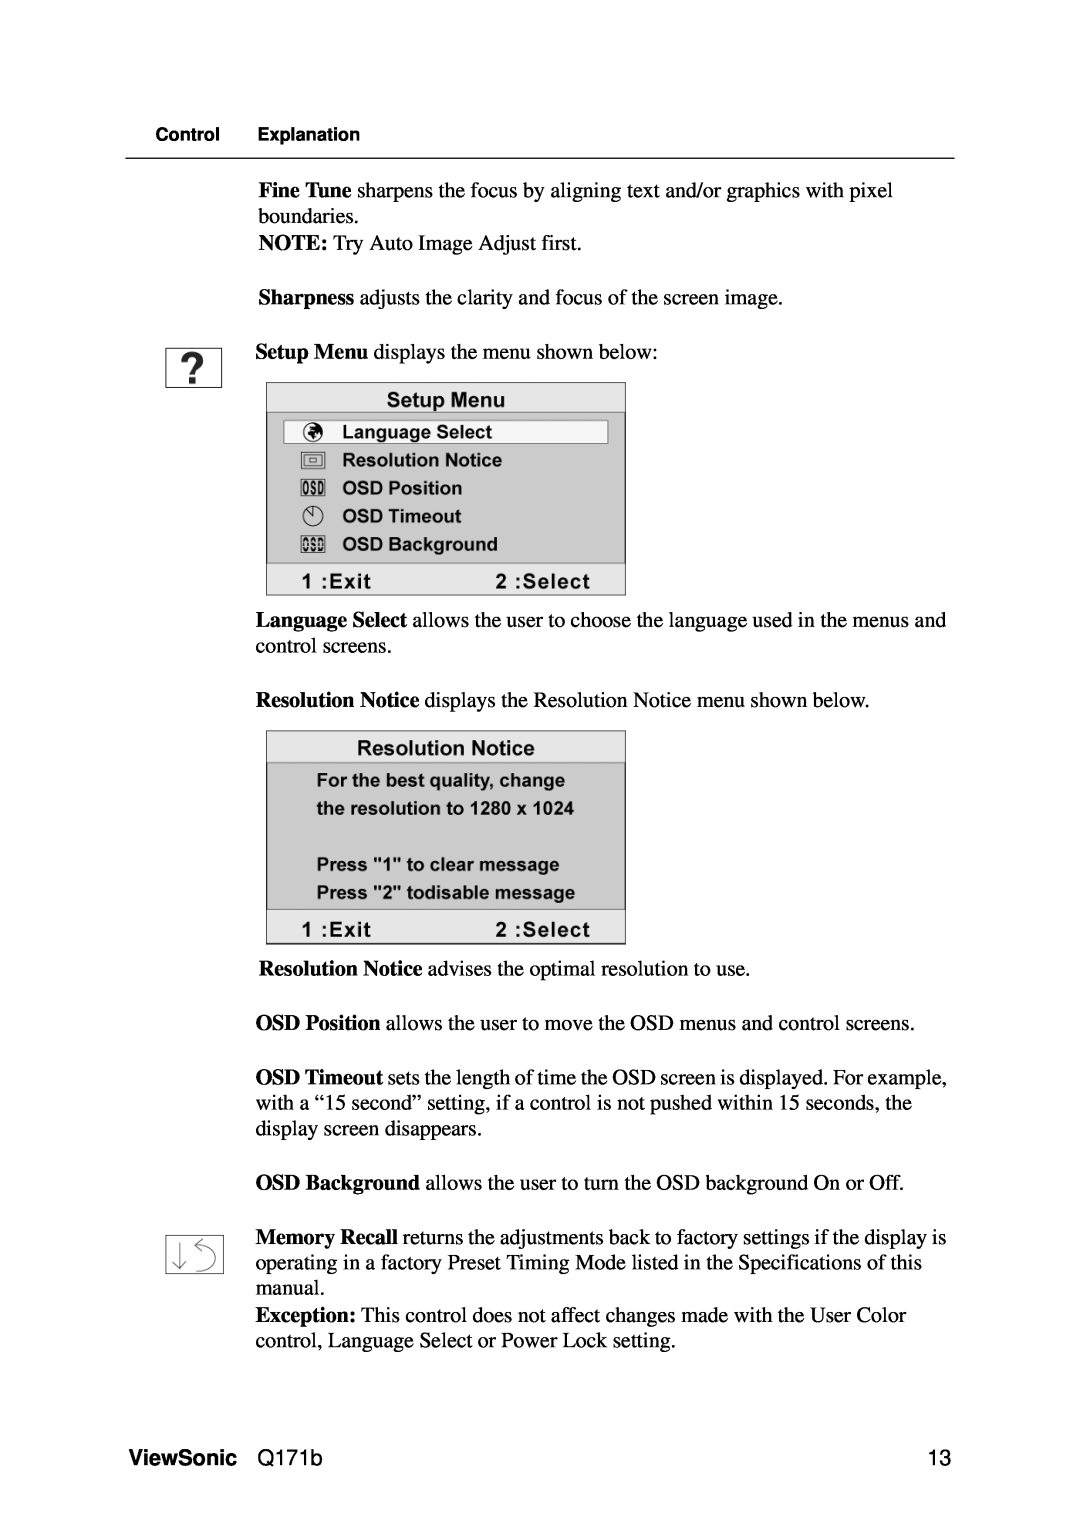 ViewSonic VS11351 manual NOTE Try Auto Image Adjust first, ViewSonic Q171b 